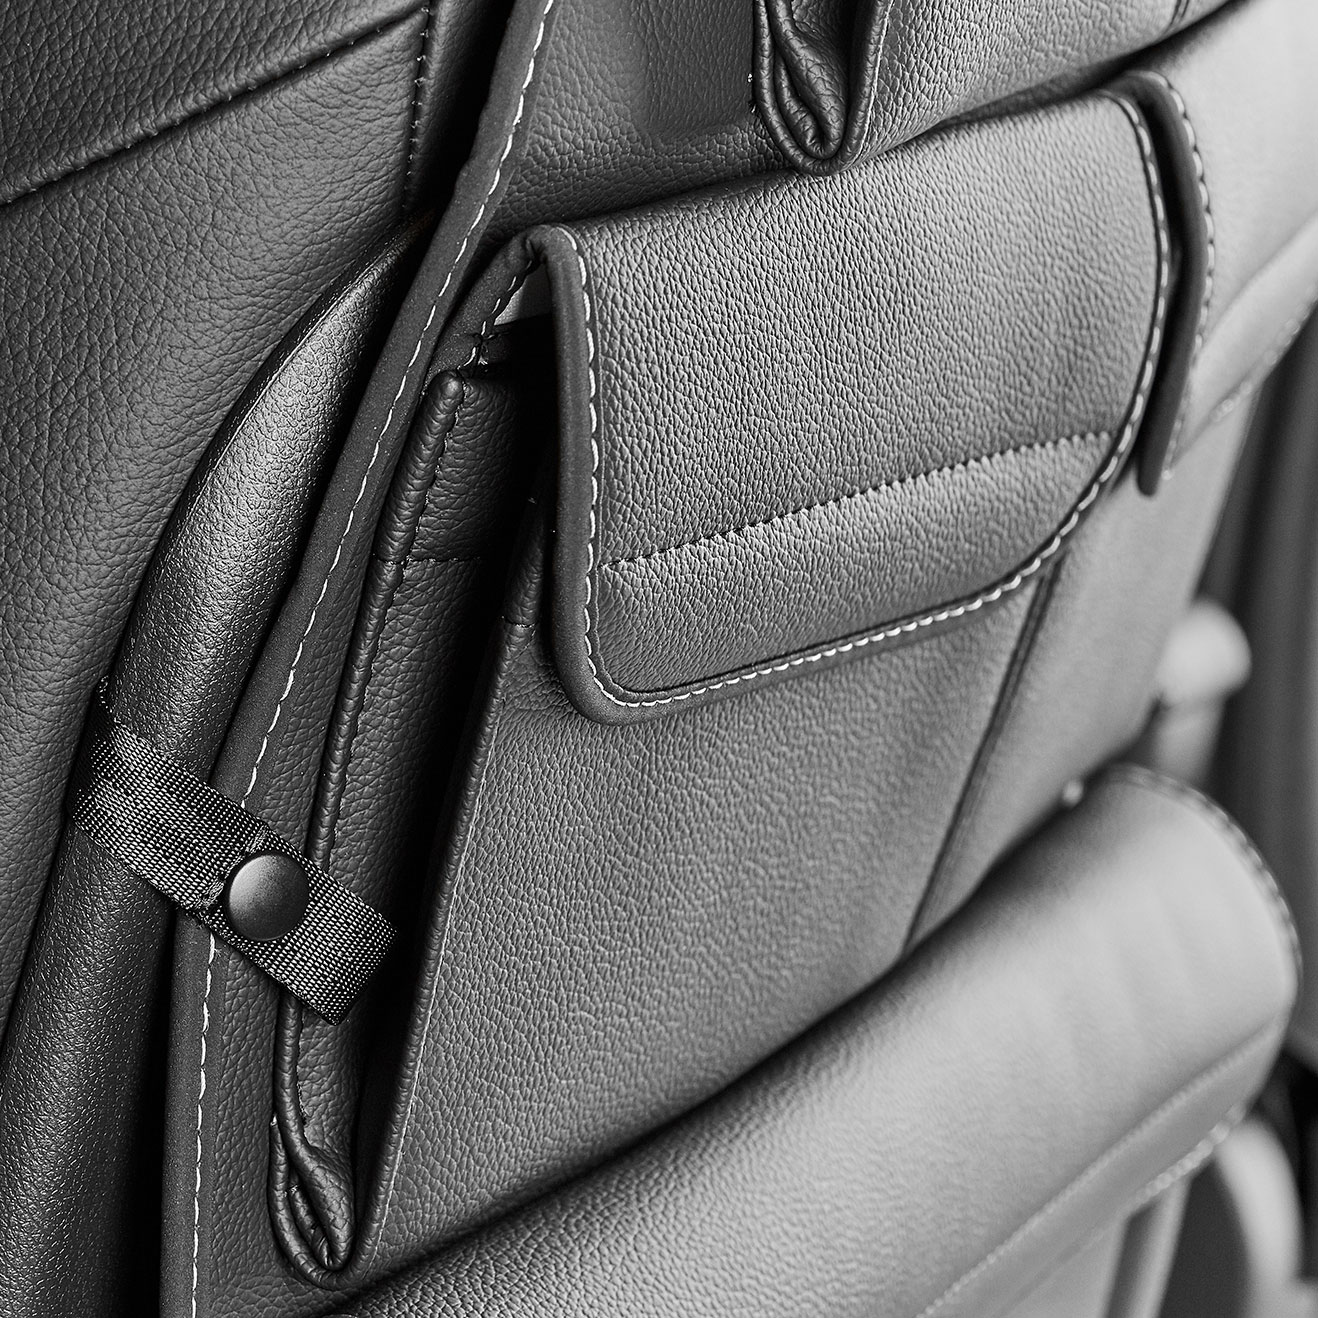 Brandrup UTILITY passenger seat, Marco Polo, Lugano leather